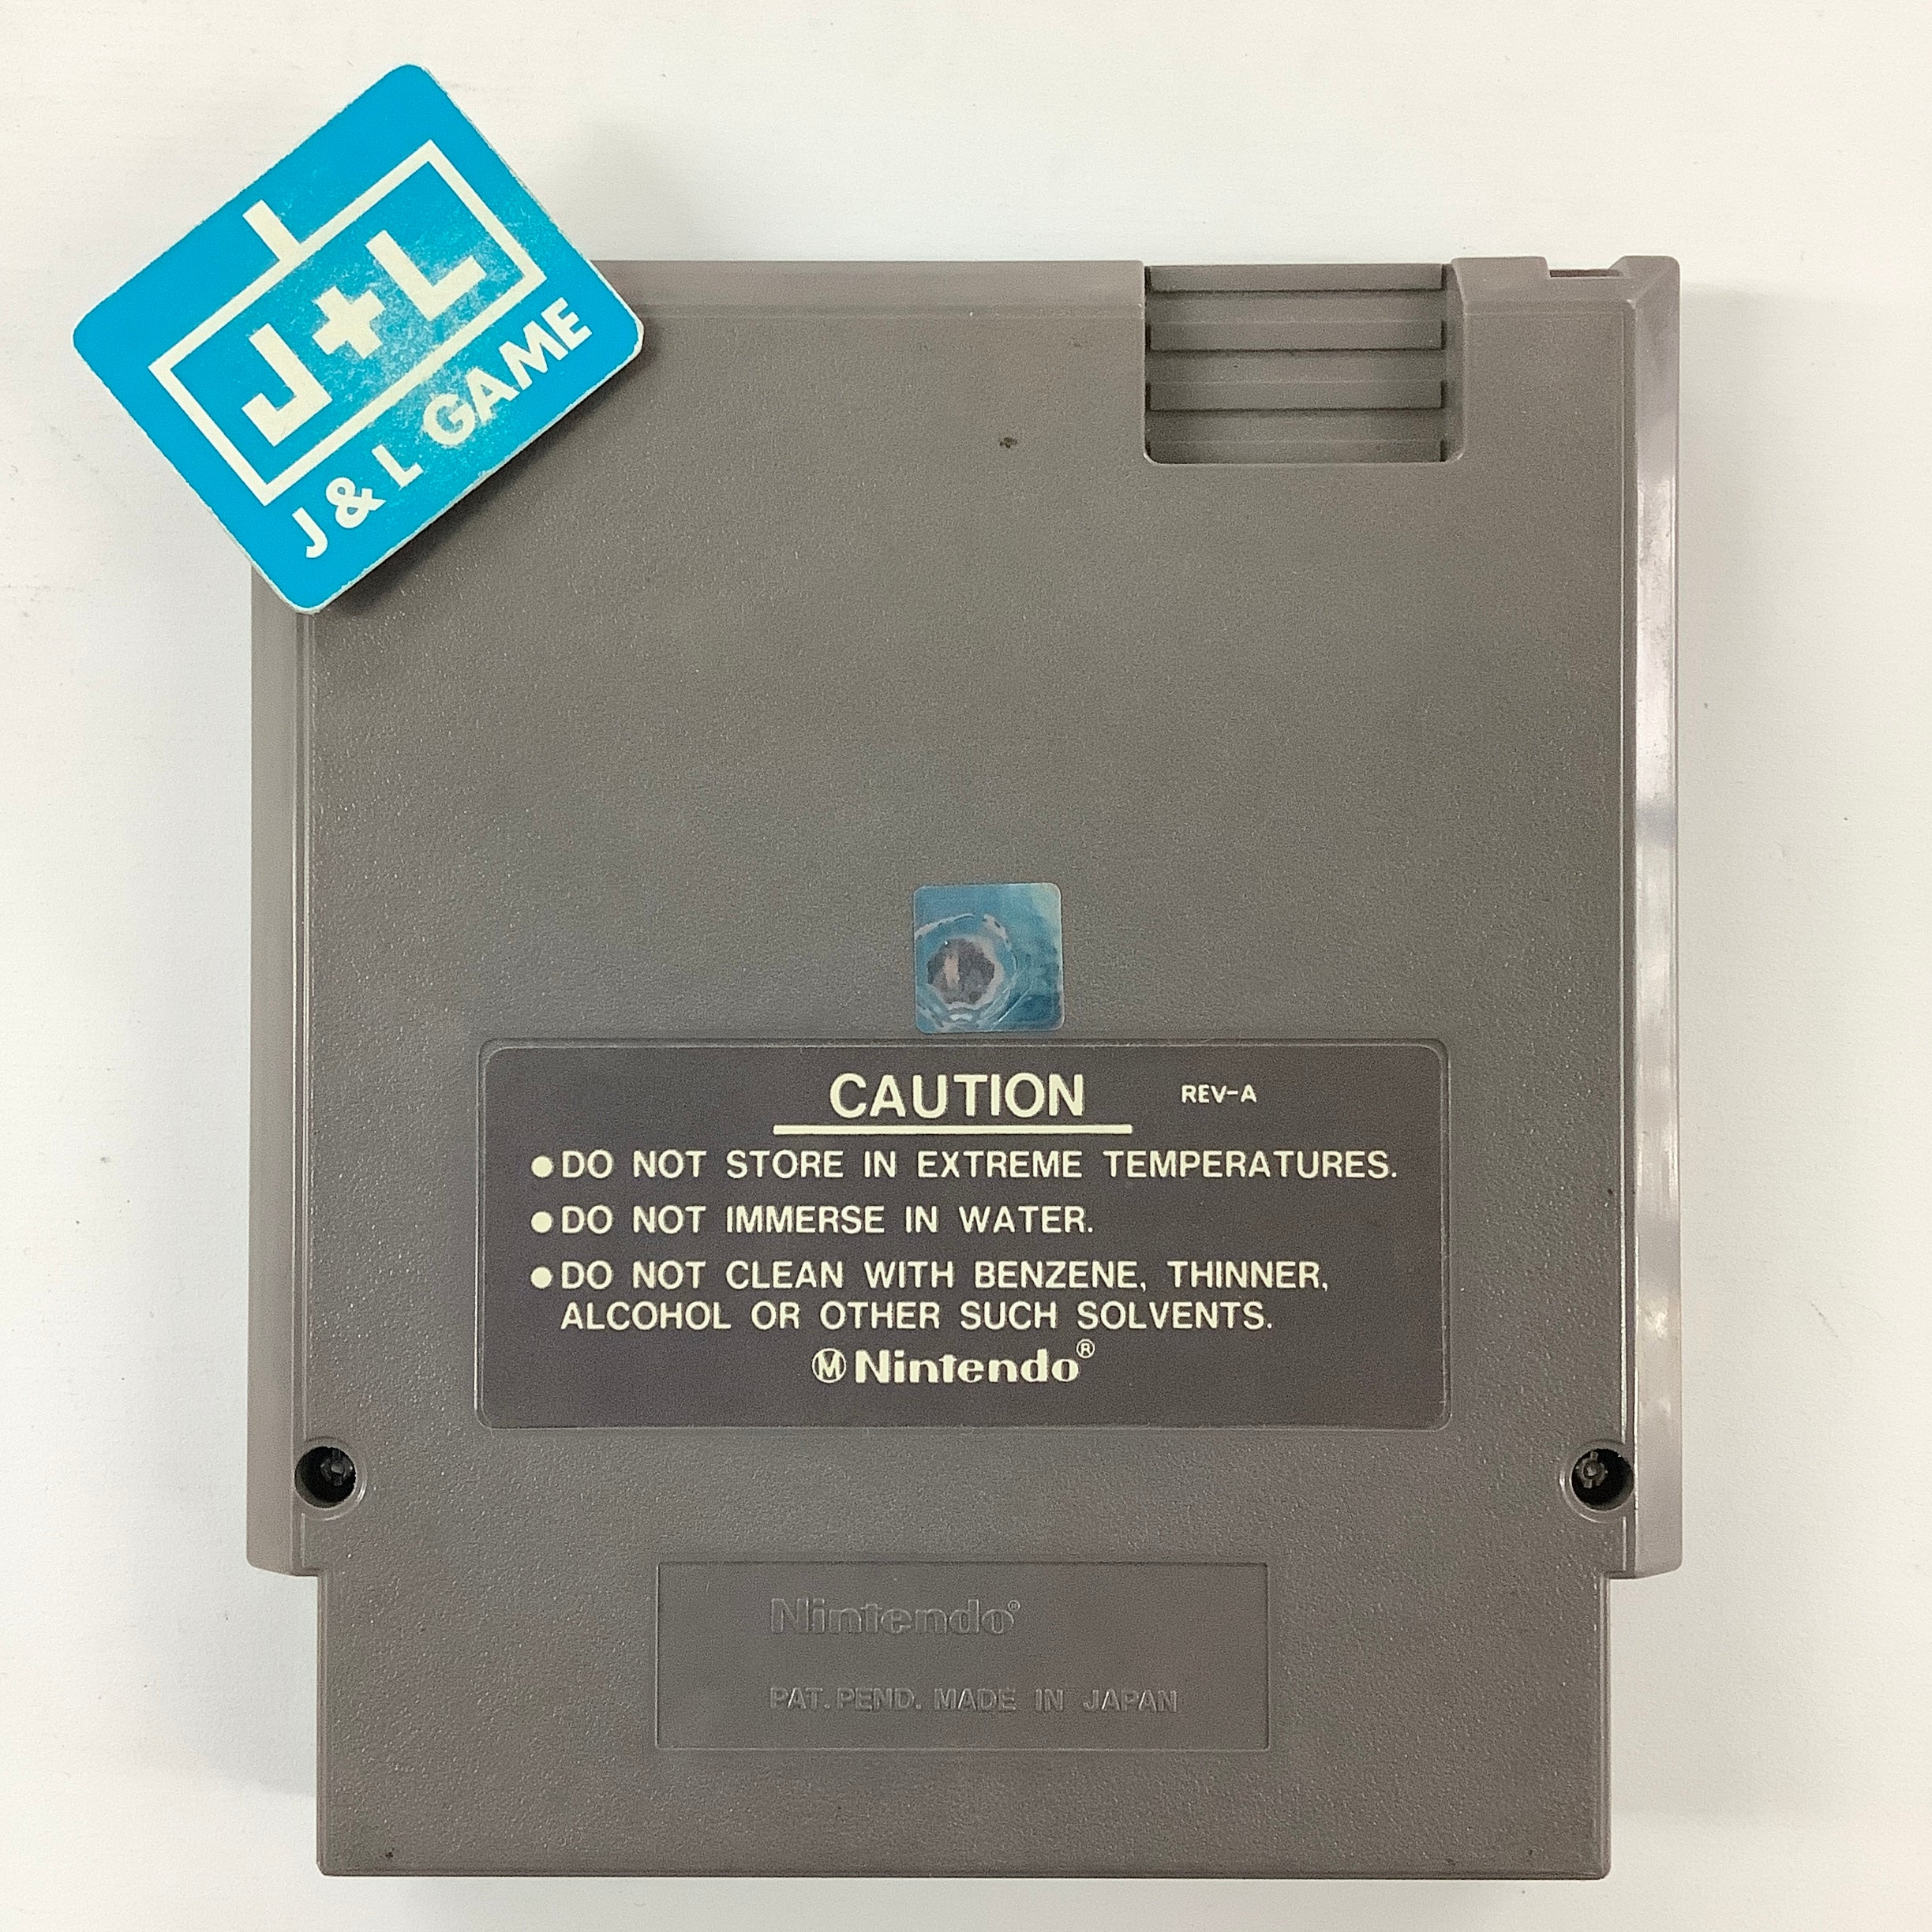 Ice Hockey - (NES) Nintendo Entertainment System [Pre-Owned] Video Games Nintendo   